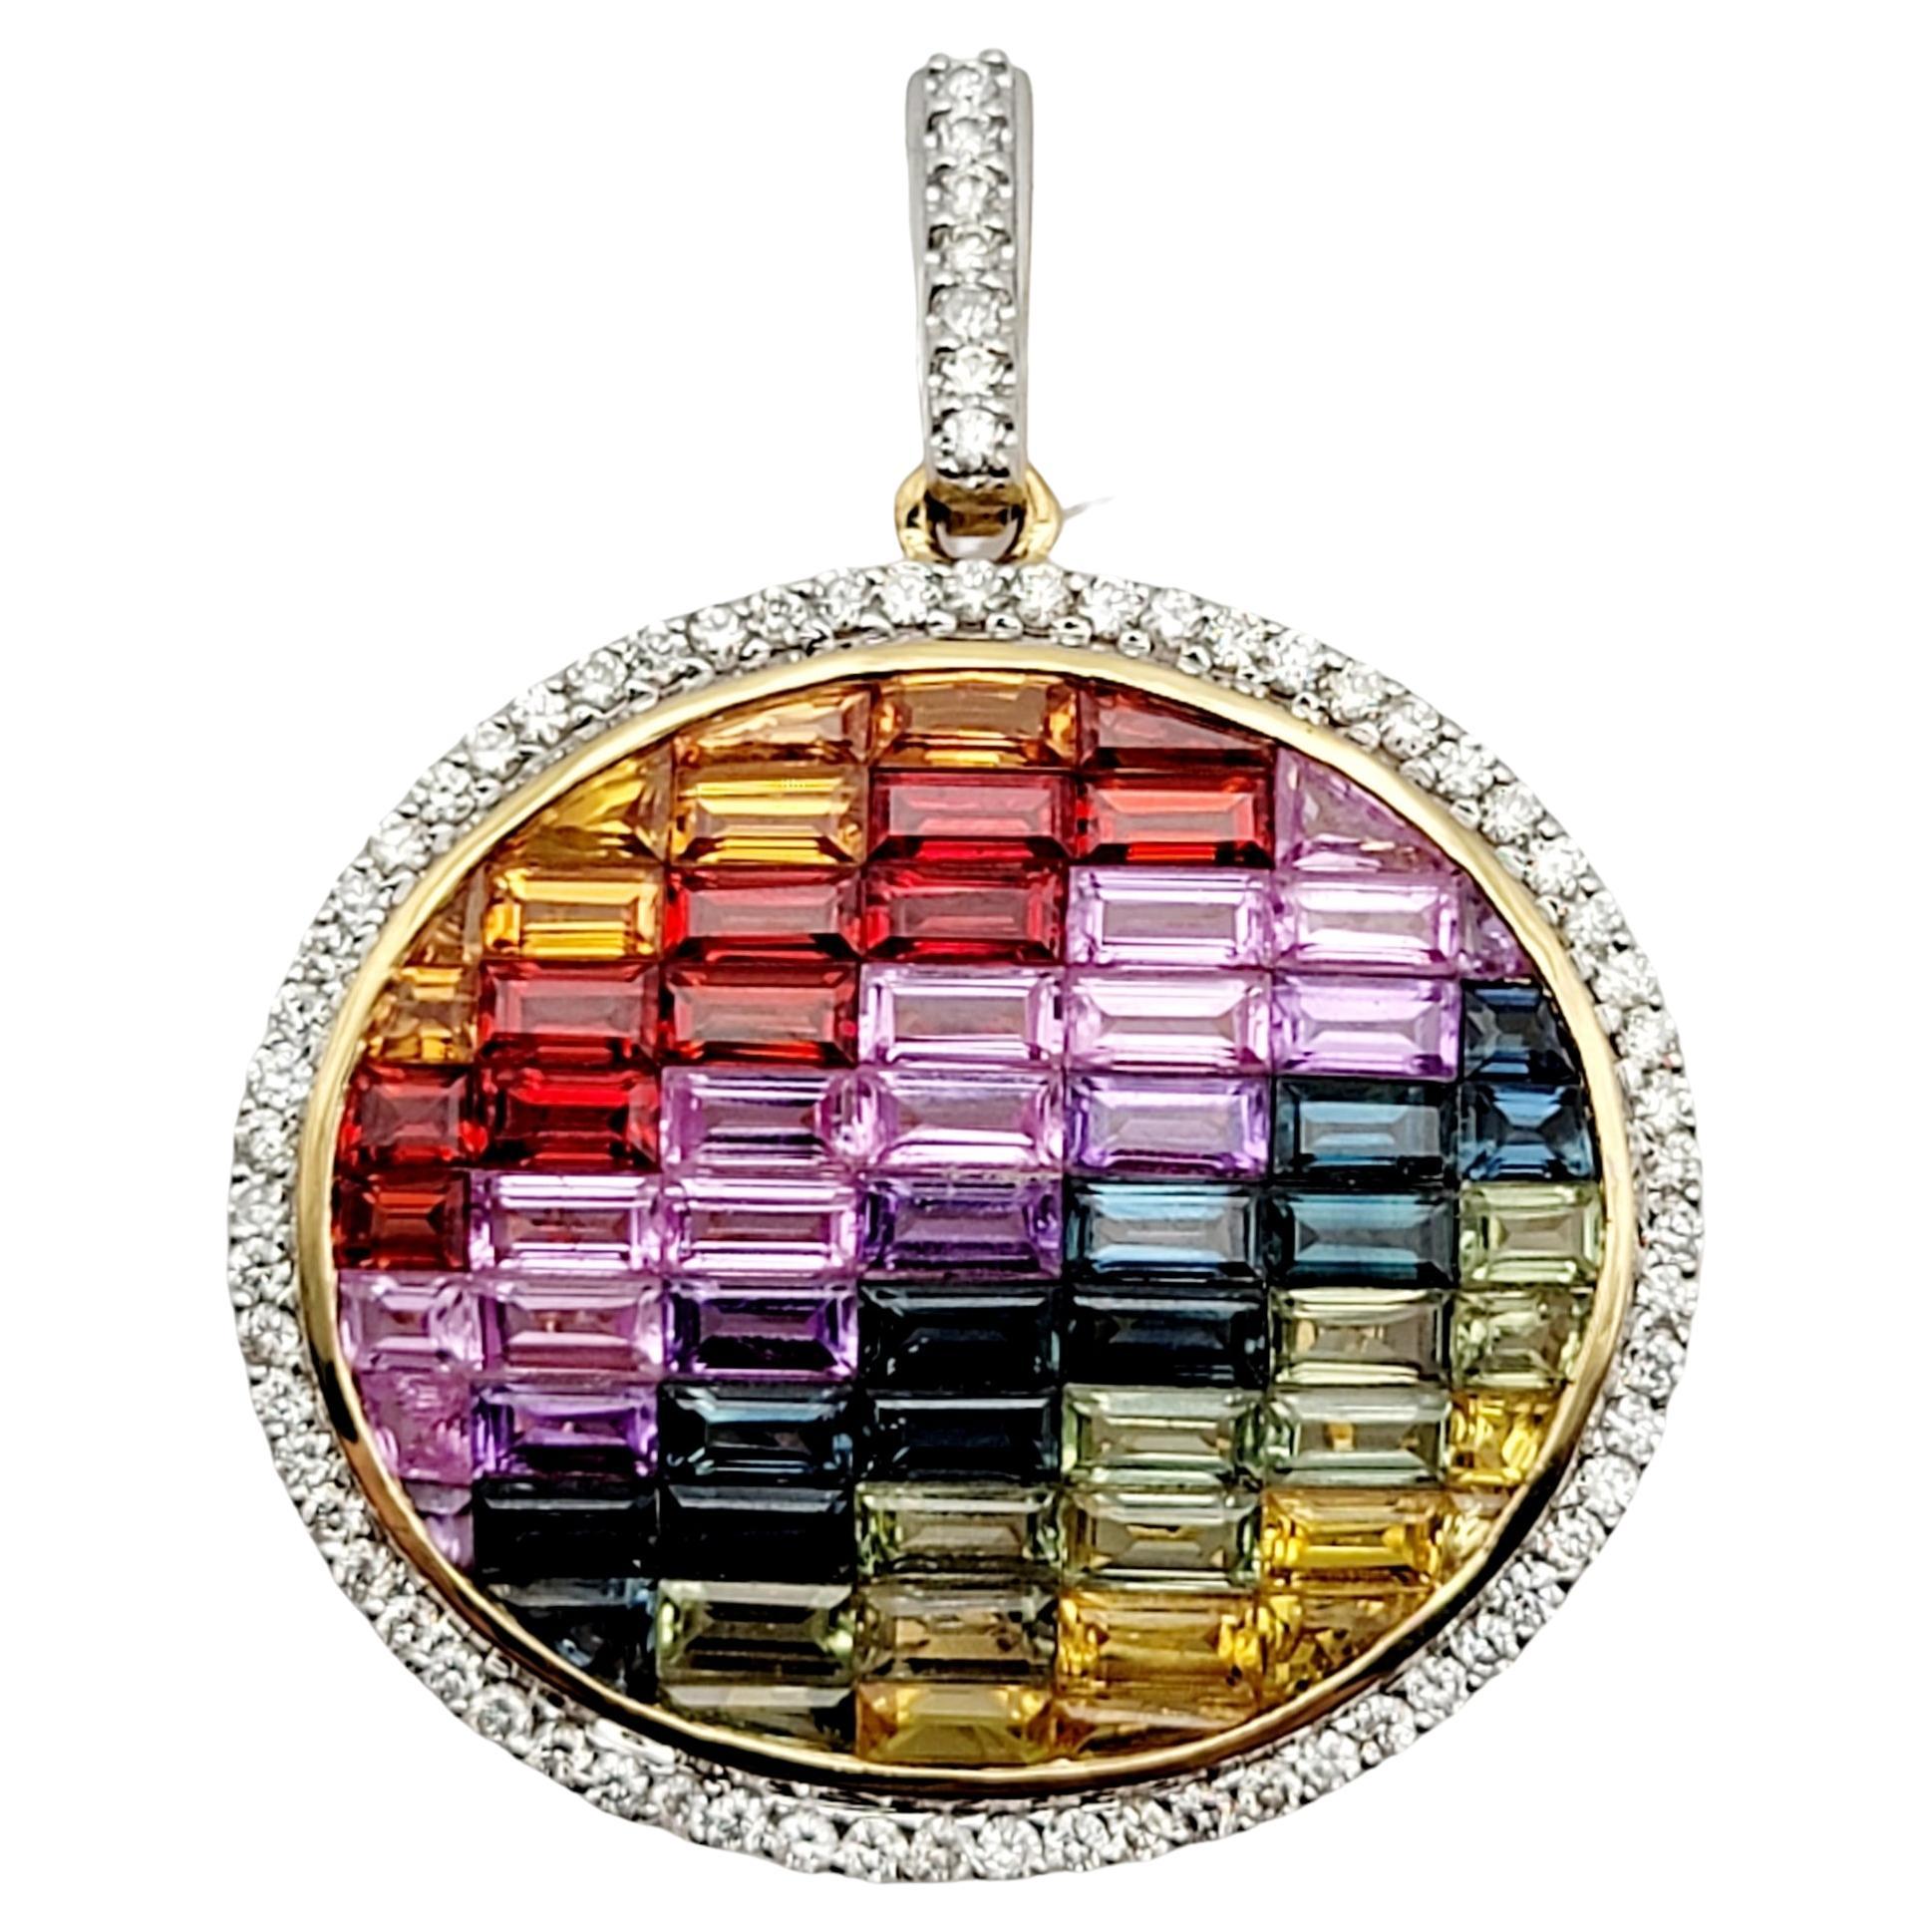 6.63 Carats Total Rainbow Sapphire and Halo Diamond Pendant in 14 Karat Gold